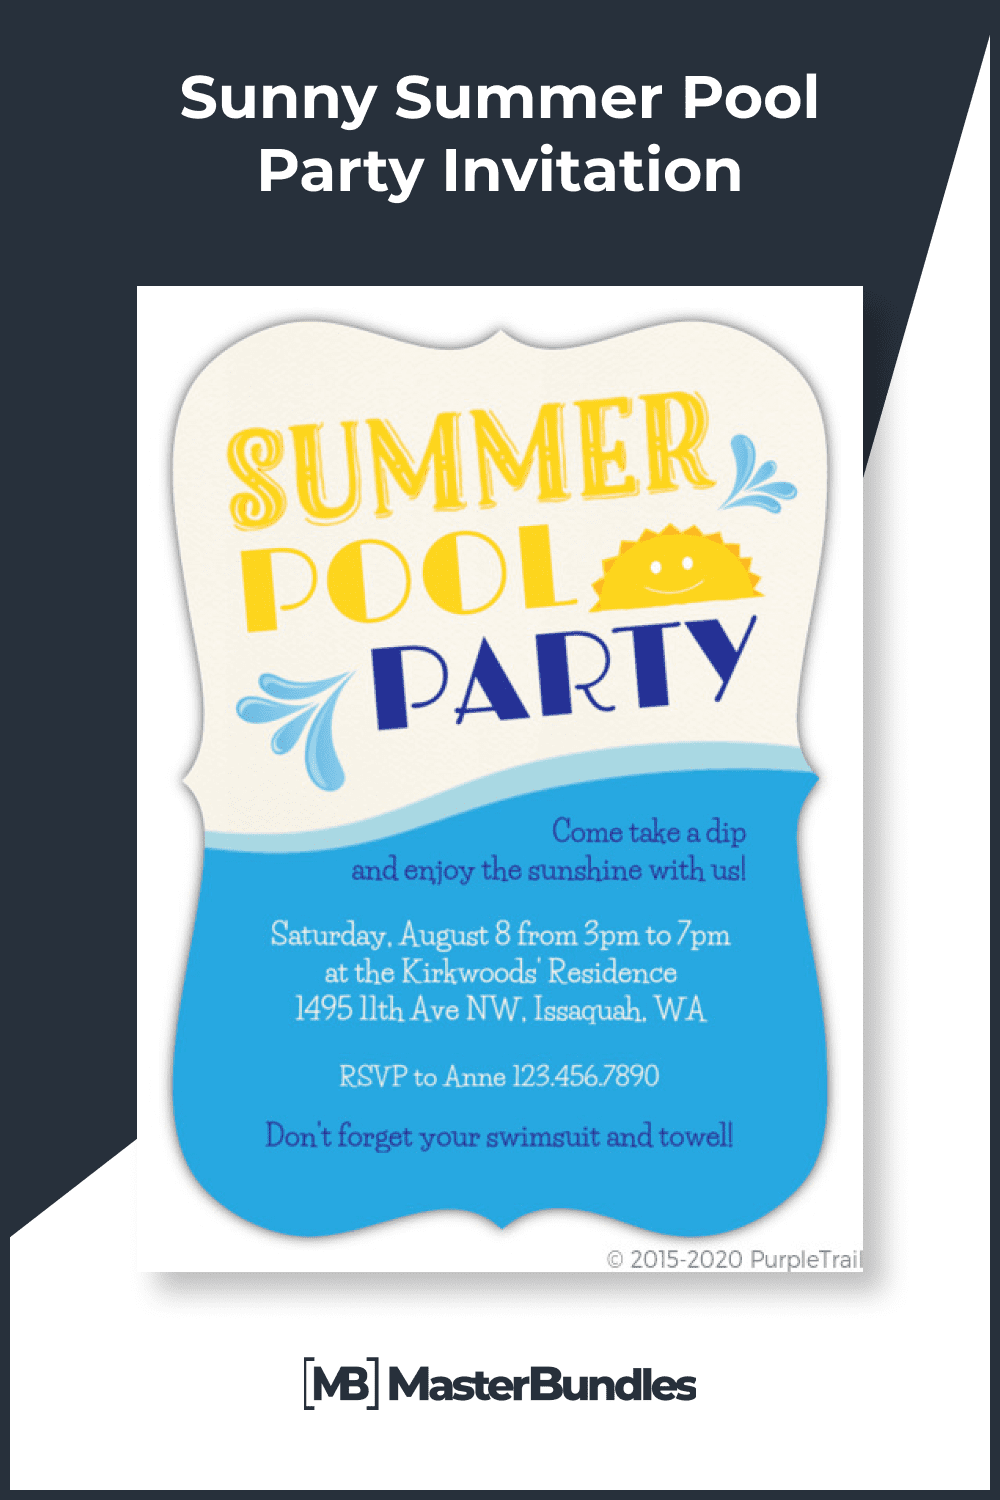 Bright sunny pool party invitations.